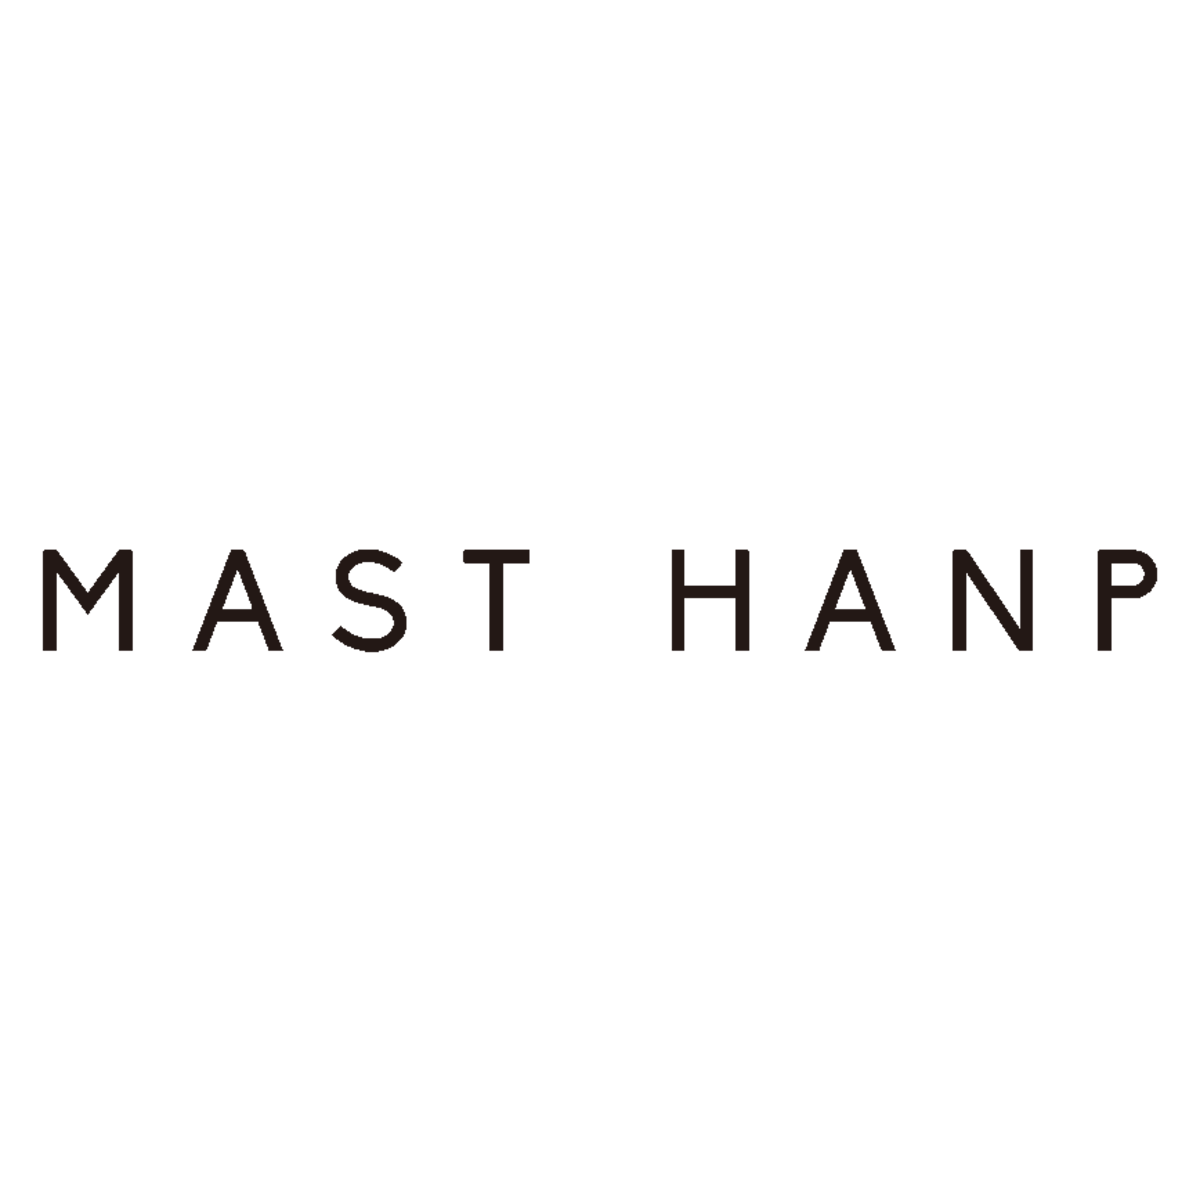 MAST HANP powered by BASE